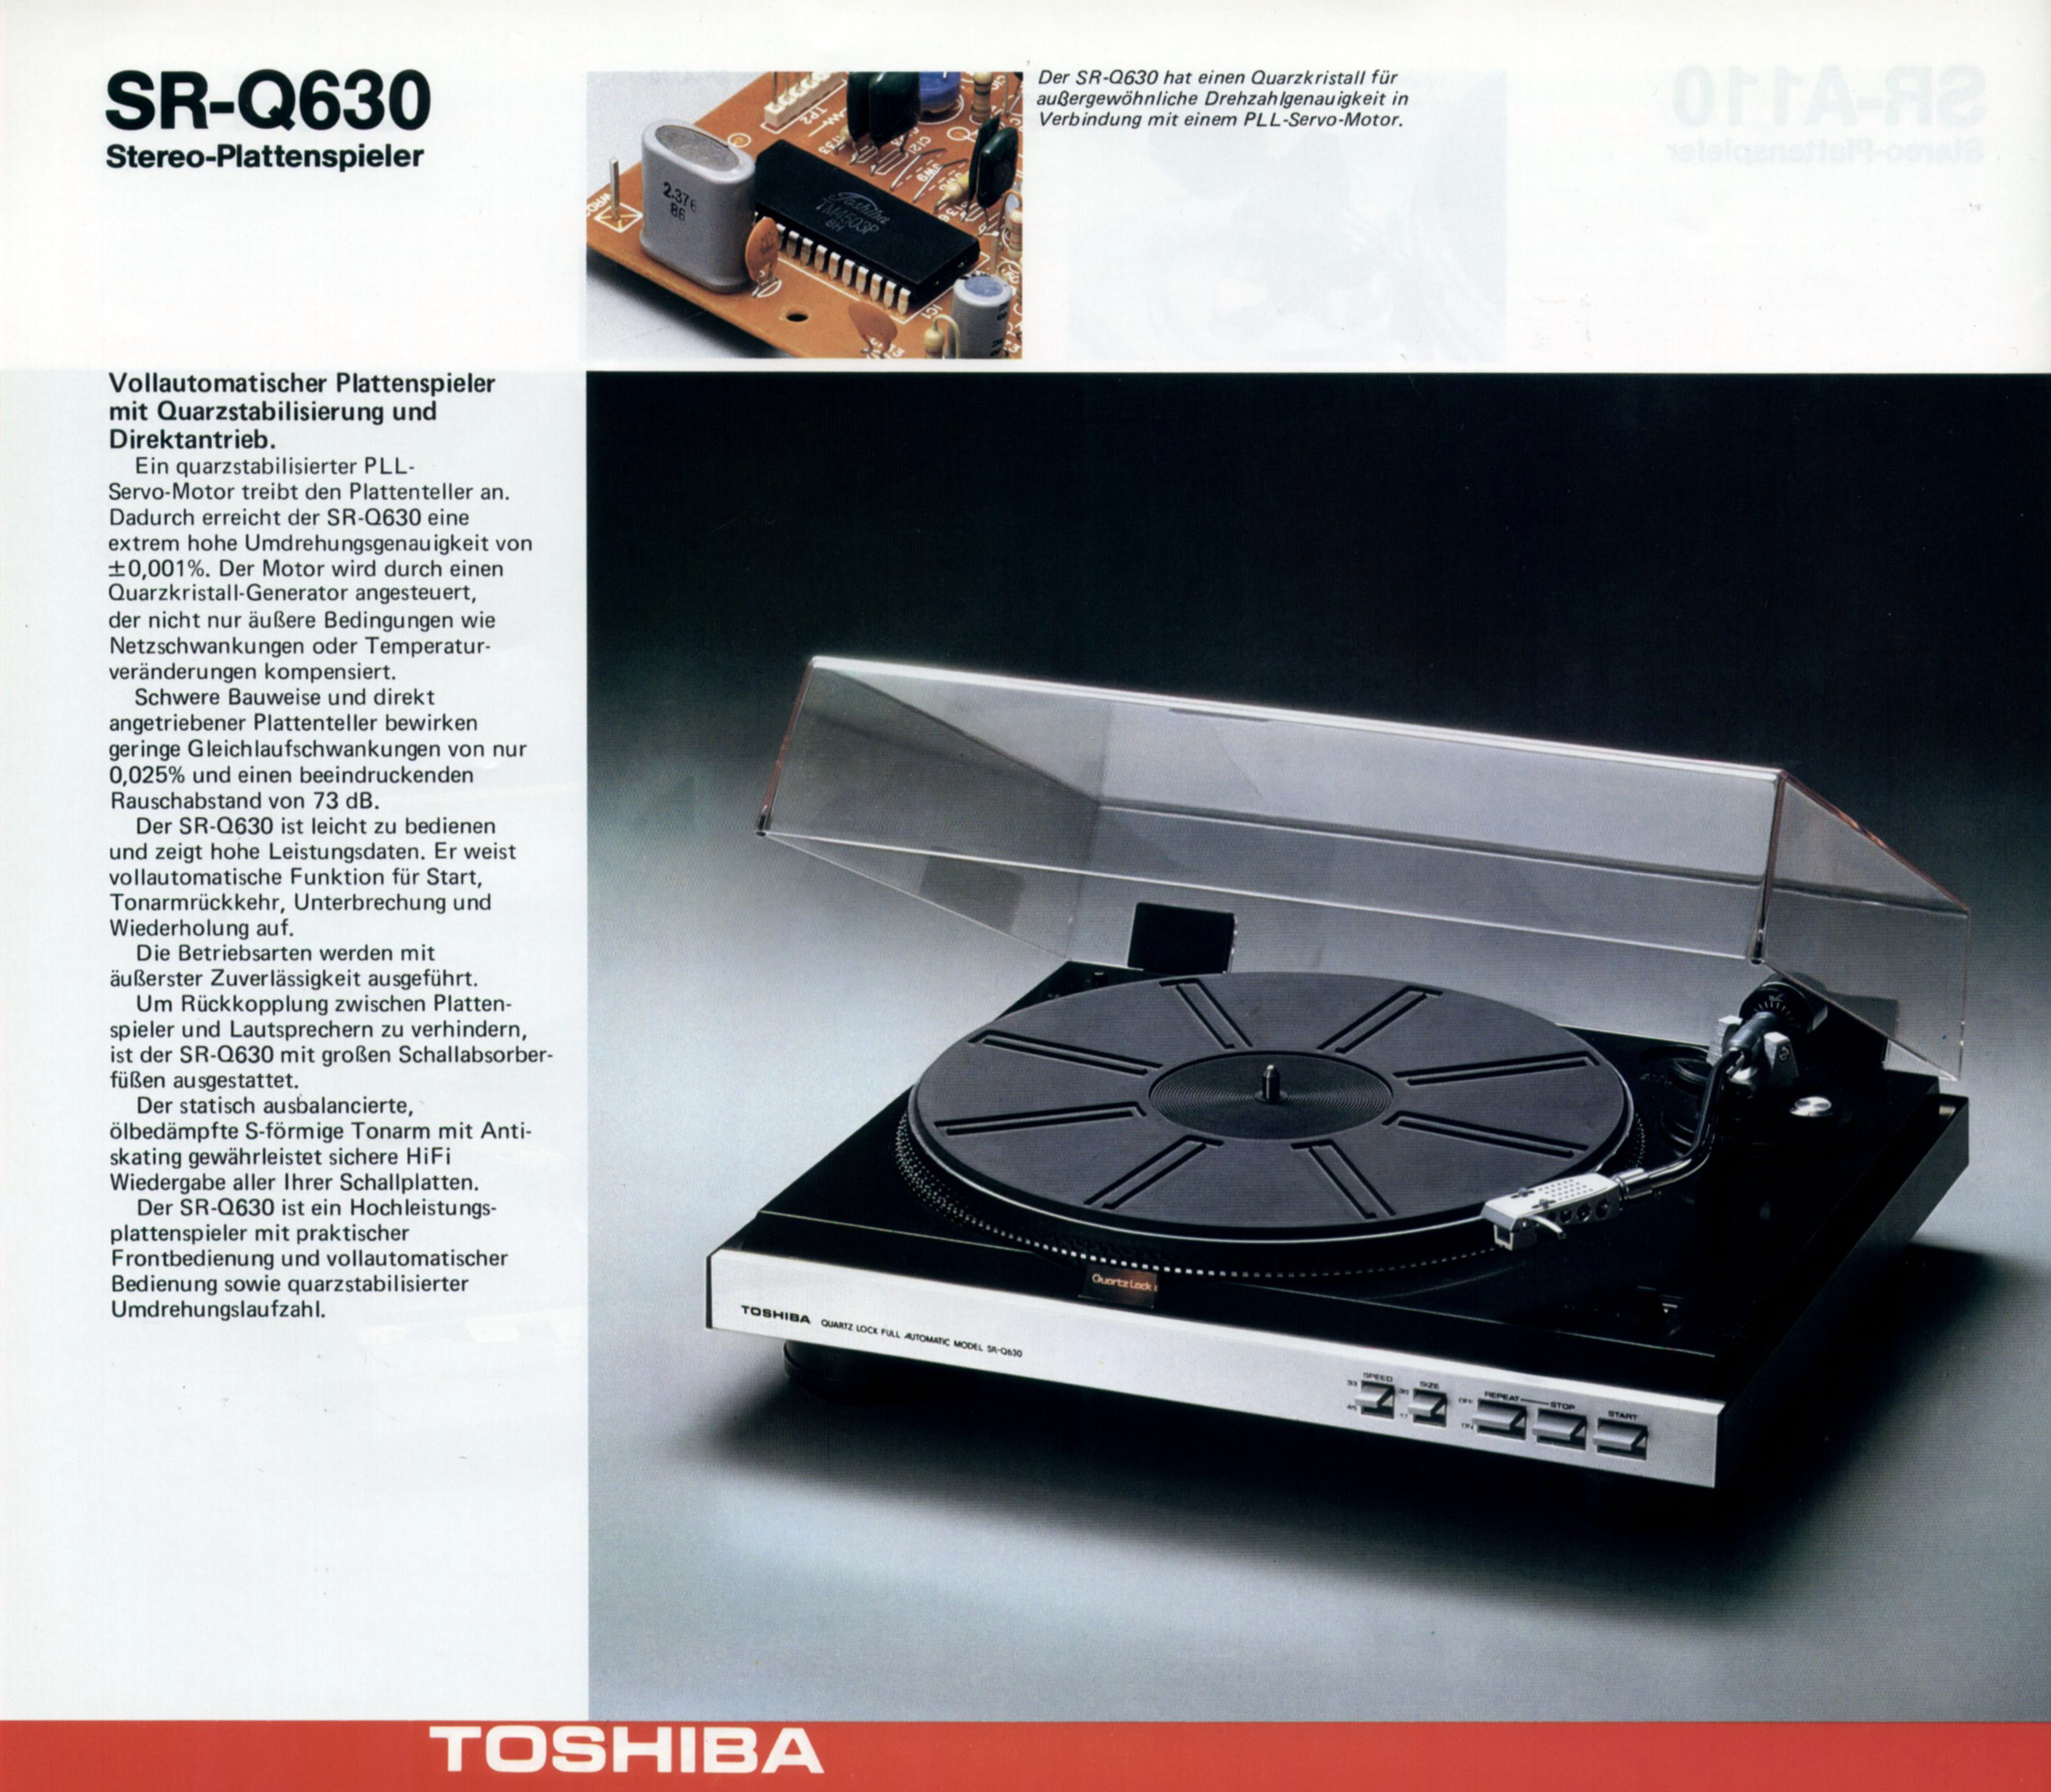 Toshiba SR-Q 630-Prospekt-1.jpg